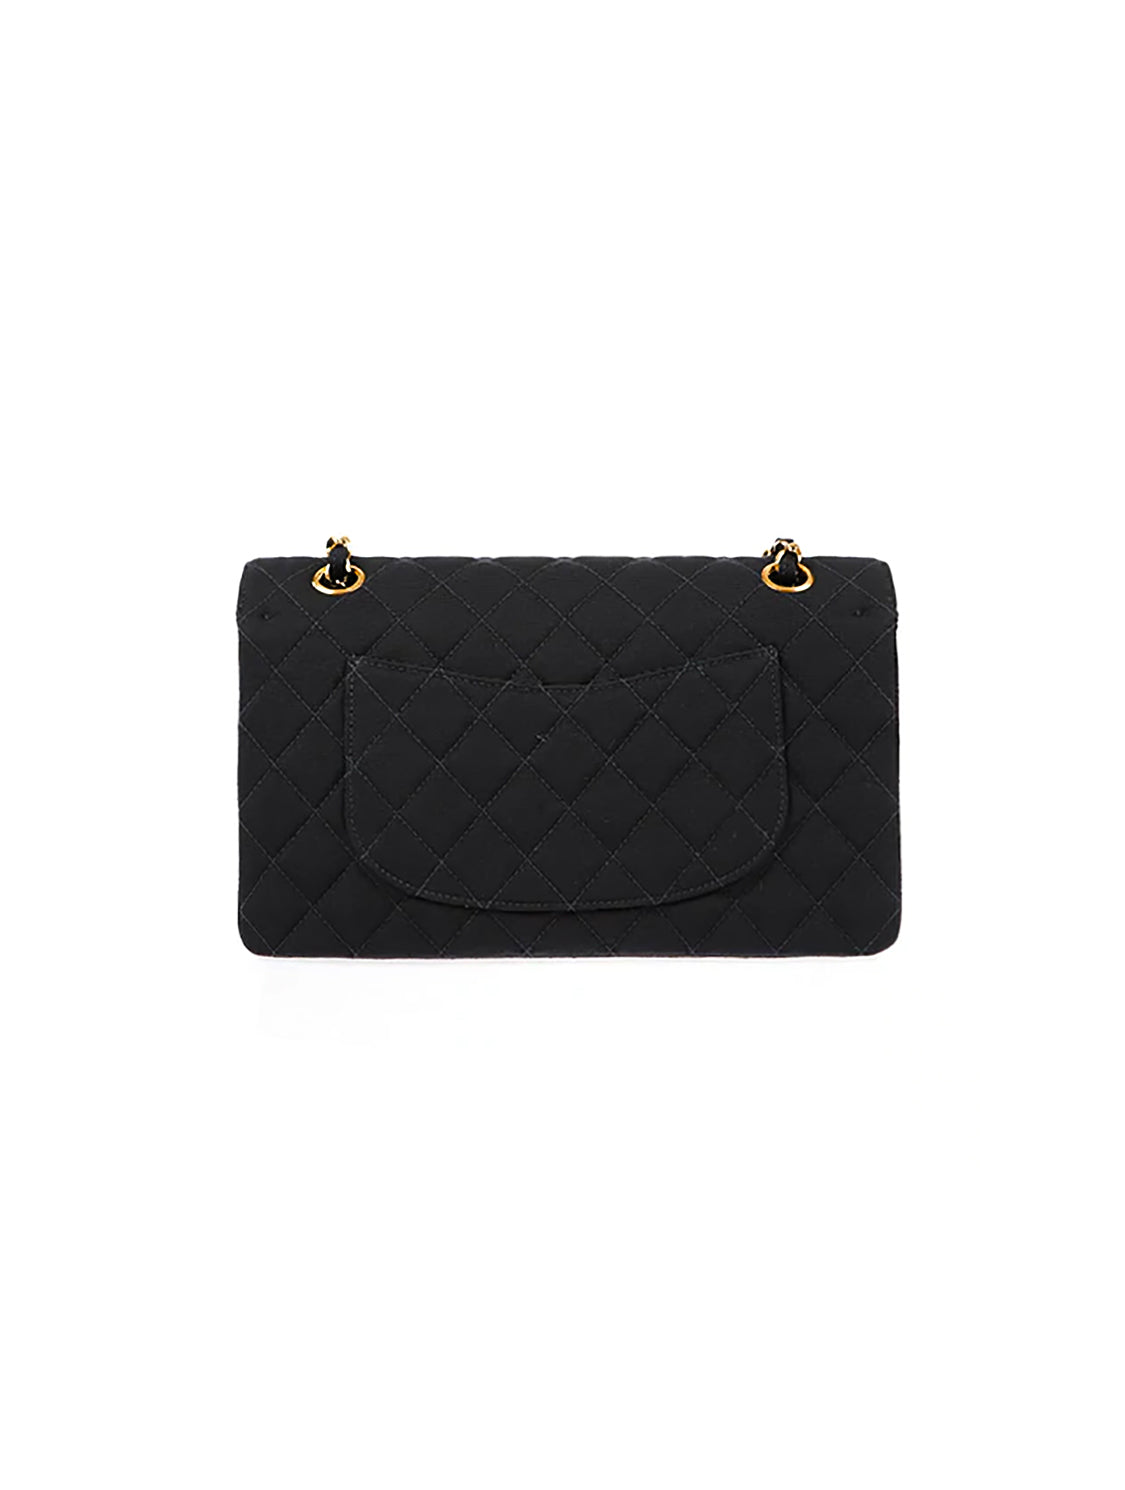 Chanel Brown Classic Jumbo Single Flap Bag